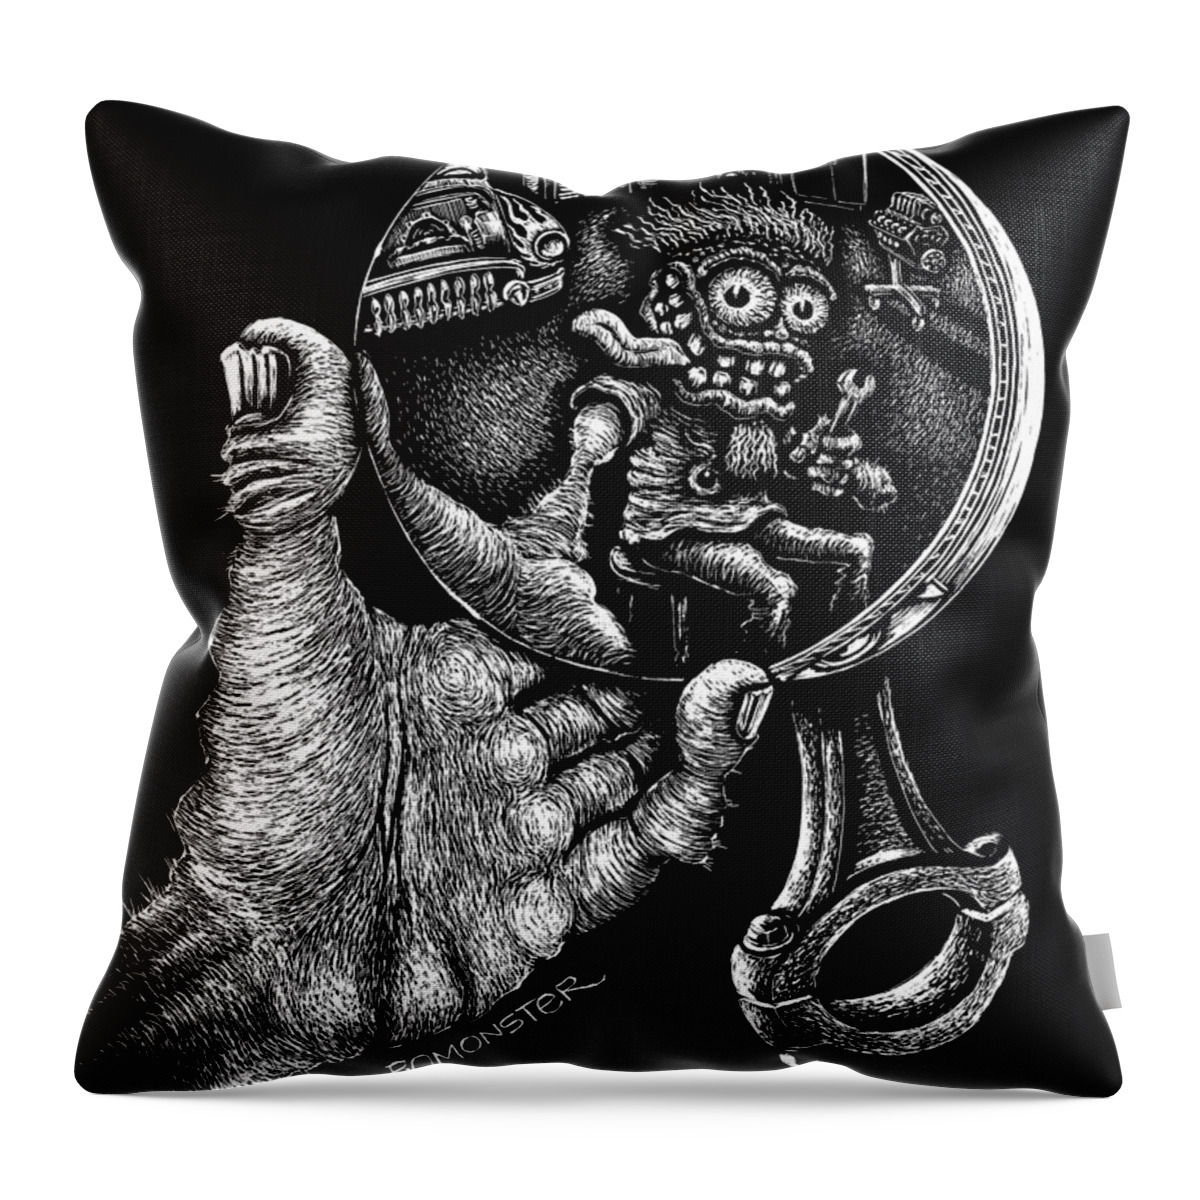 Hot Rodder Throw Pillow featuring the digital art Self Reflection by Bomonster 